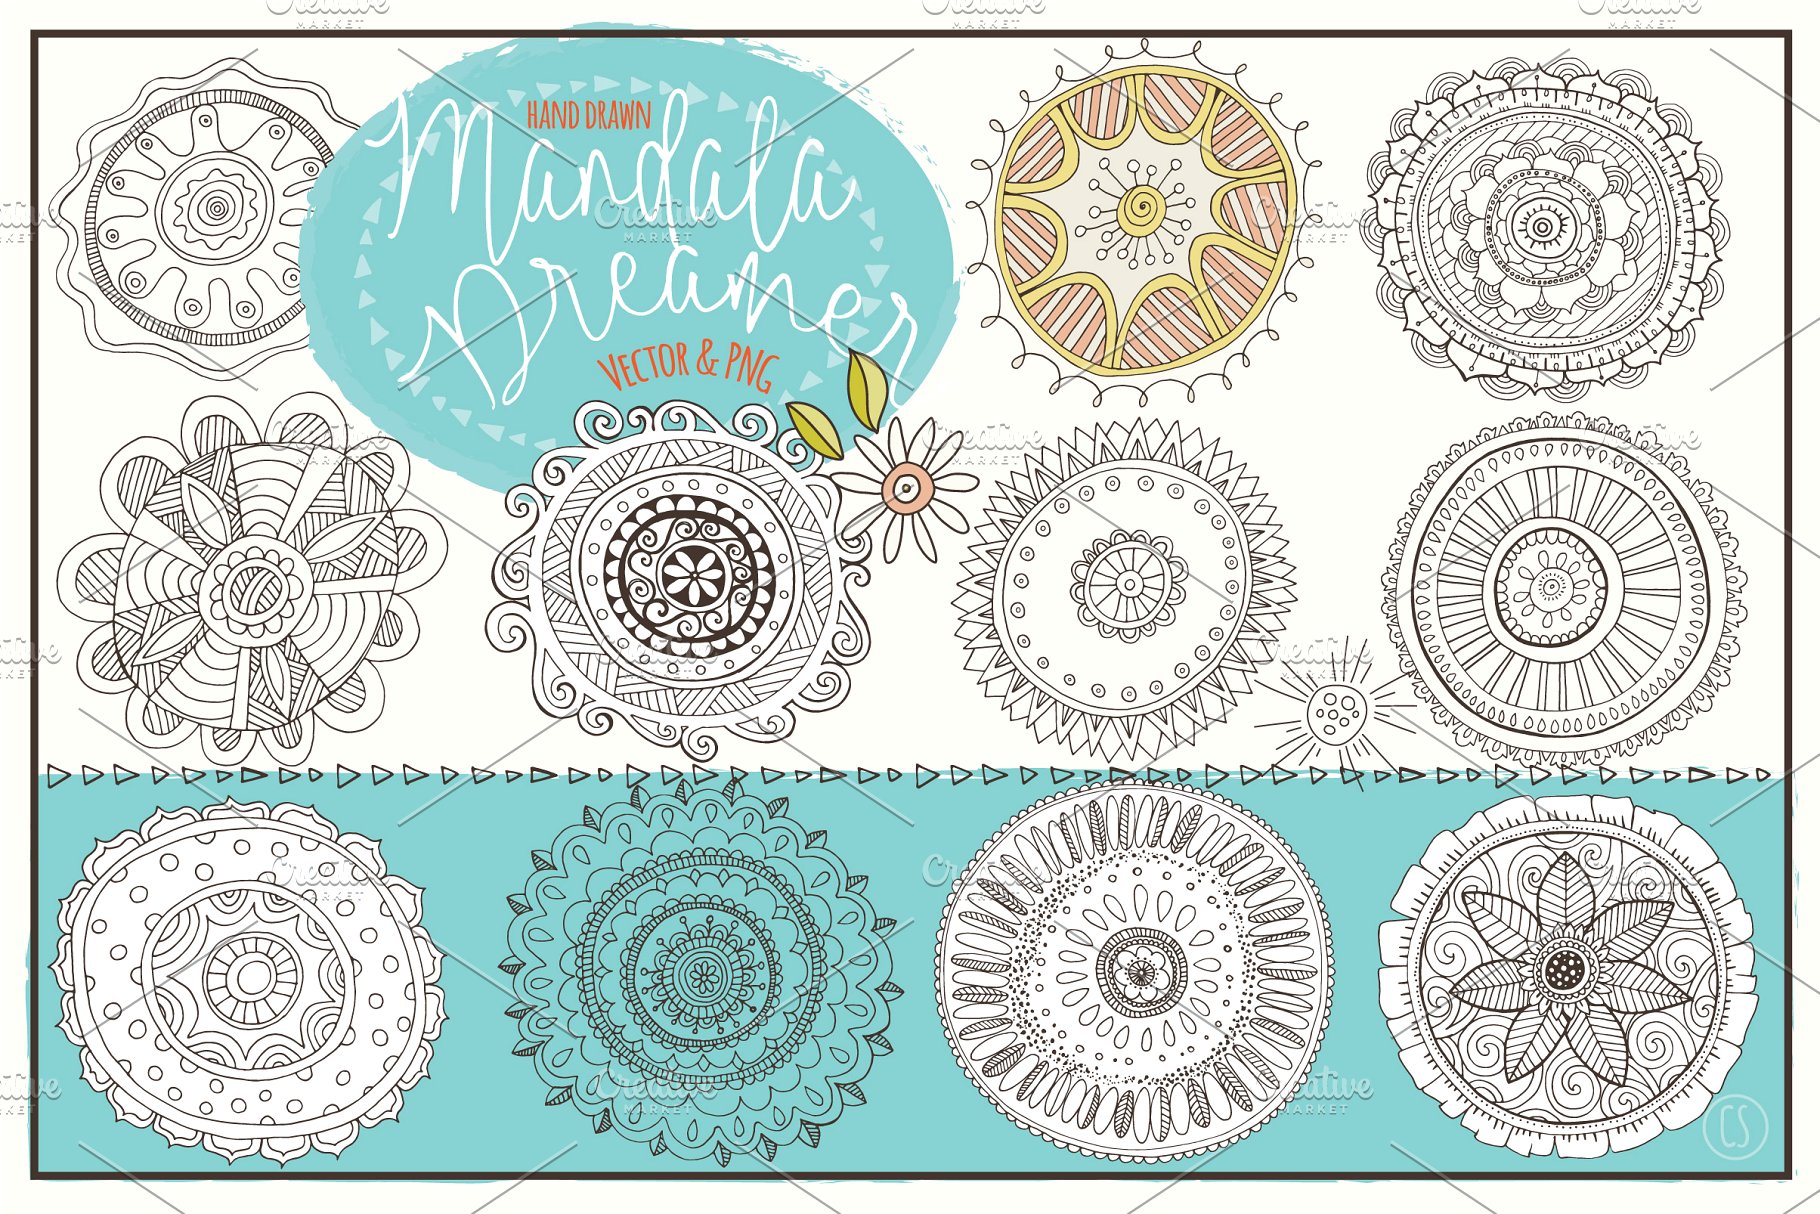 曼荼罗手绘矢量插图 Mandala Vector Illustrations插图3